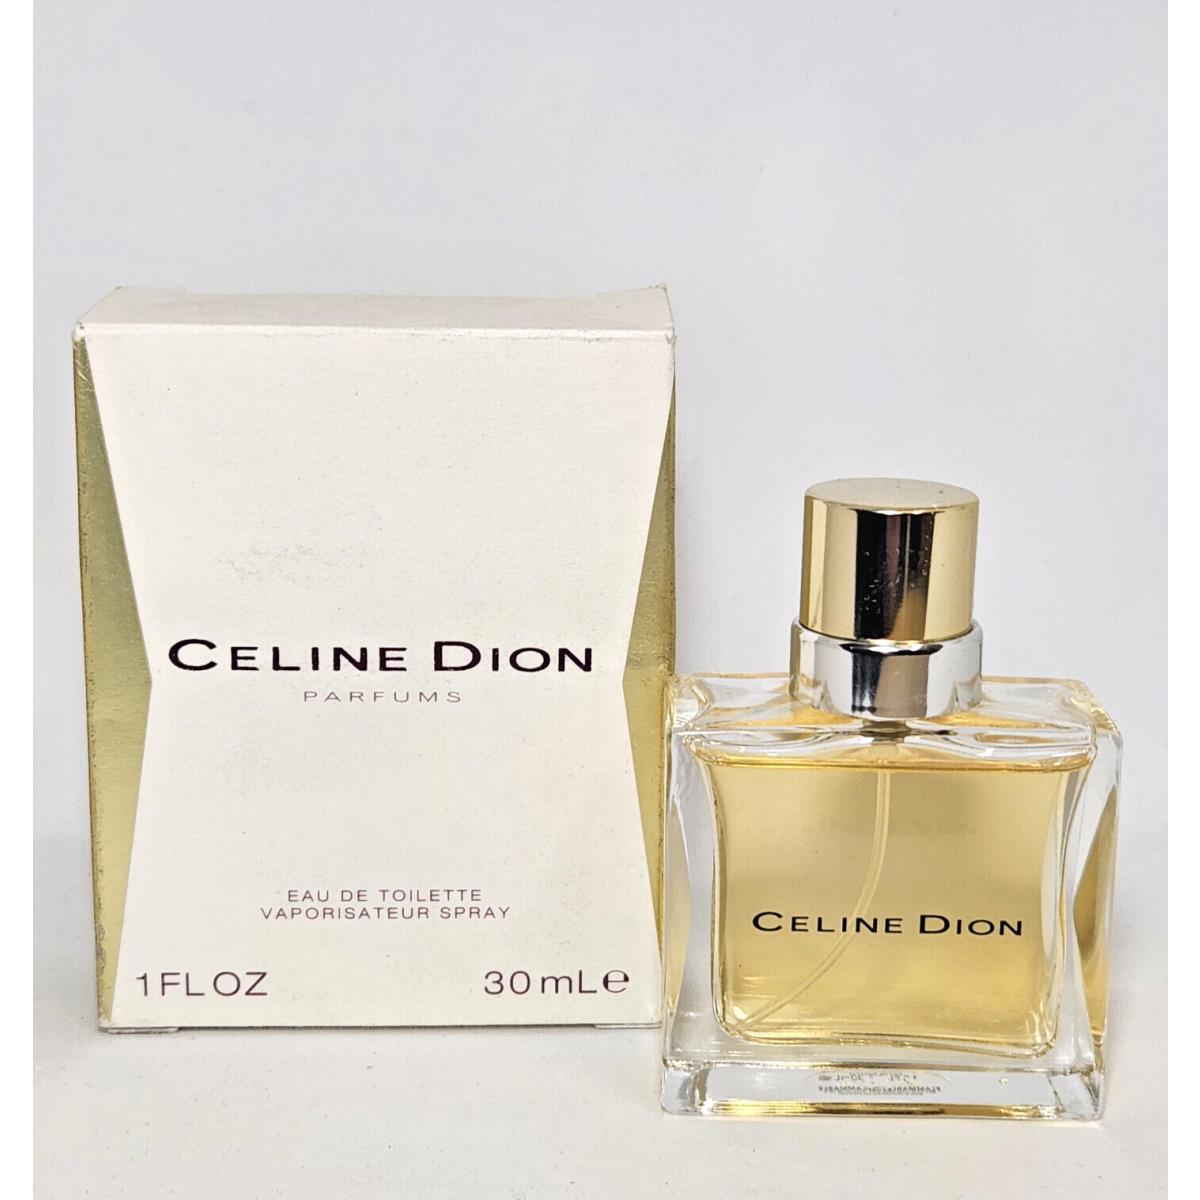 Celine Dion Edt Perfume Spray For Women 1 oz / 30 ml Free Shpg